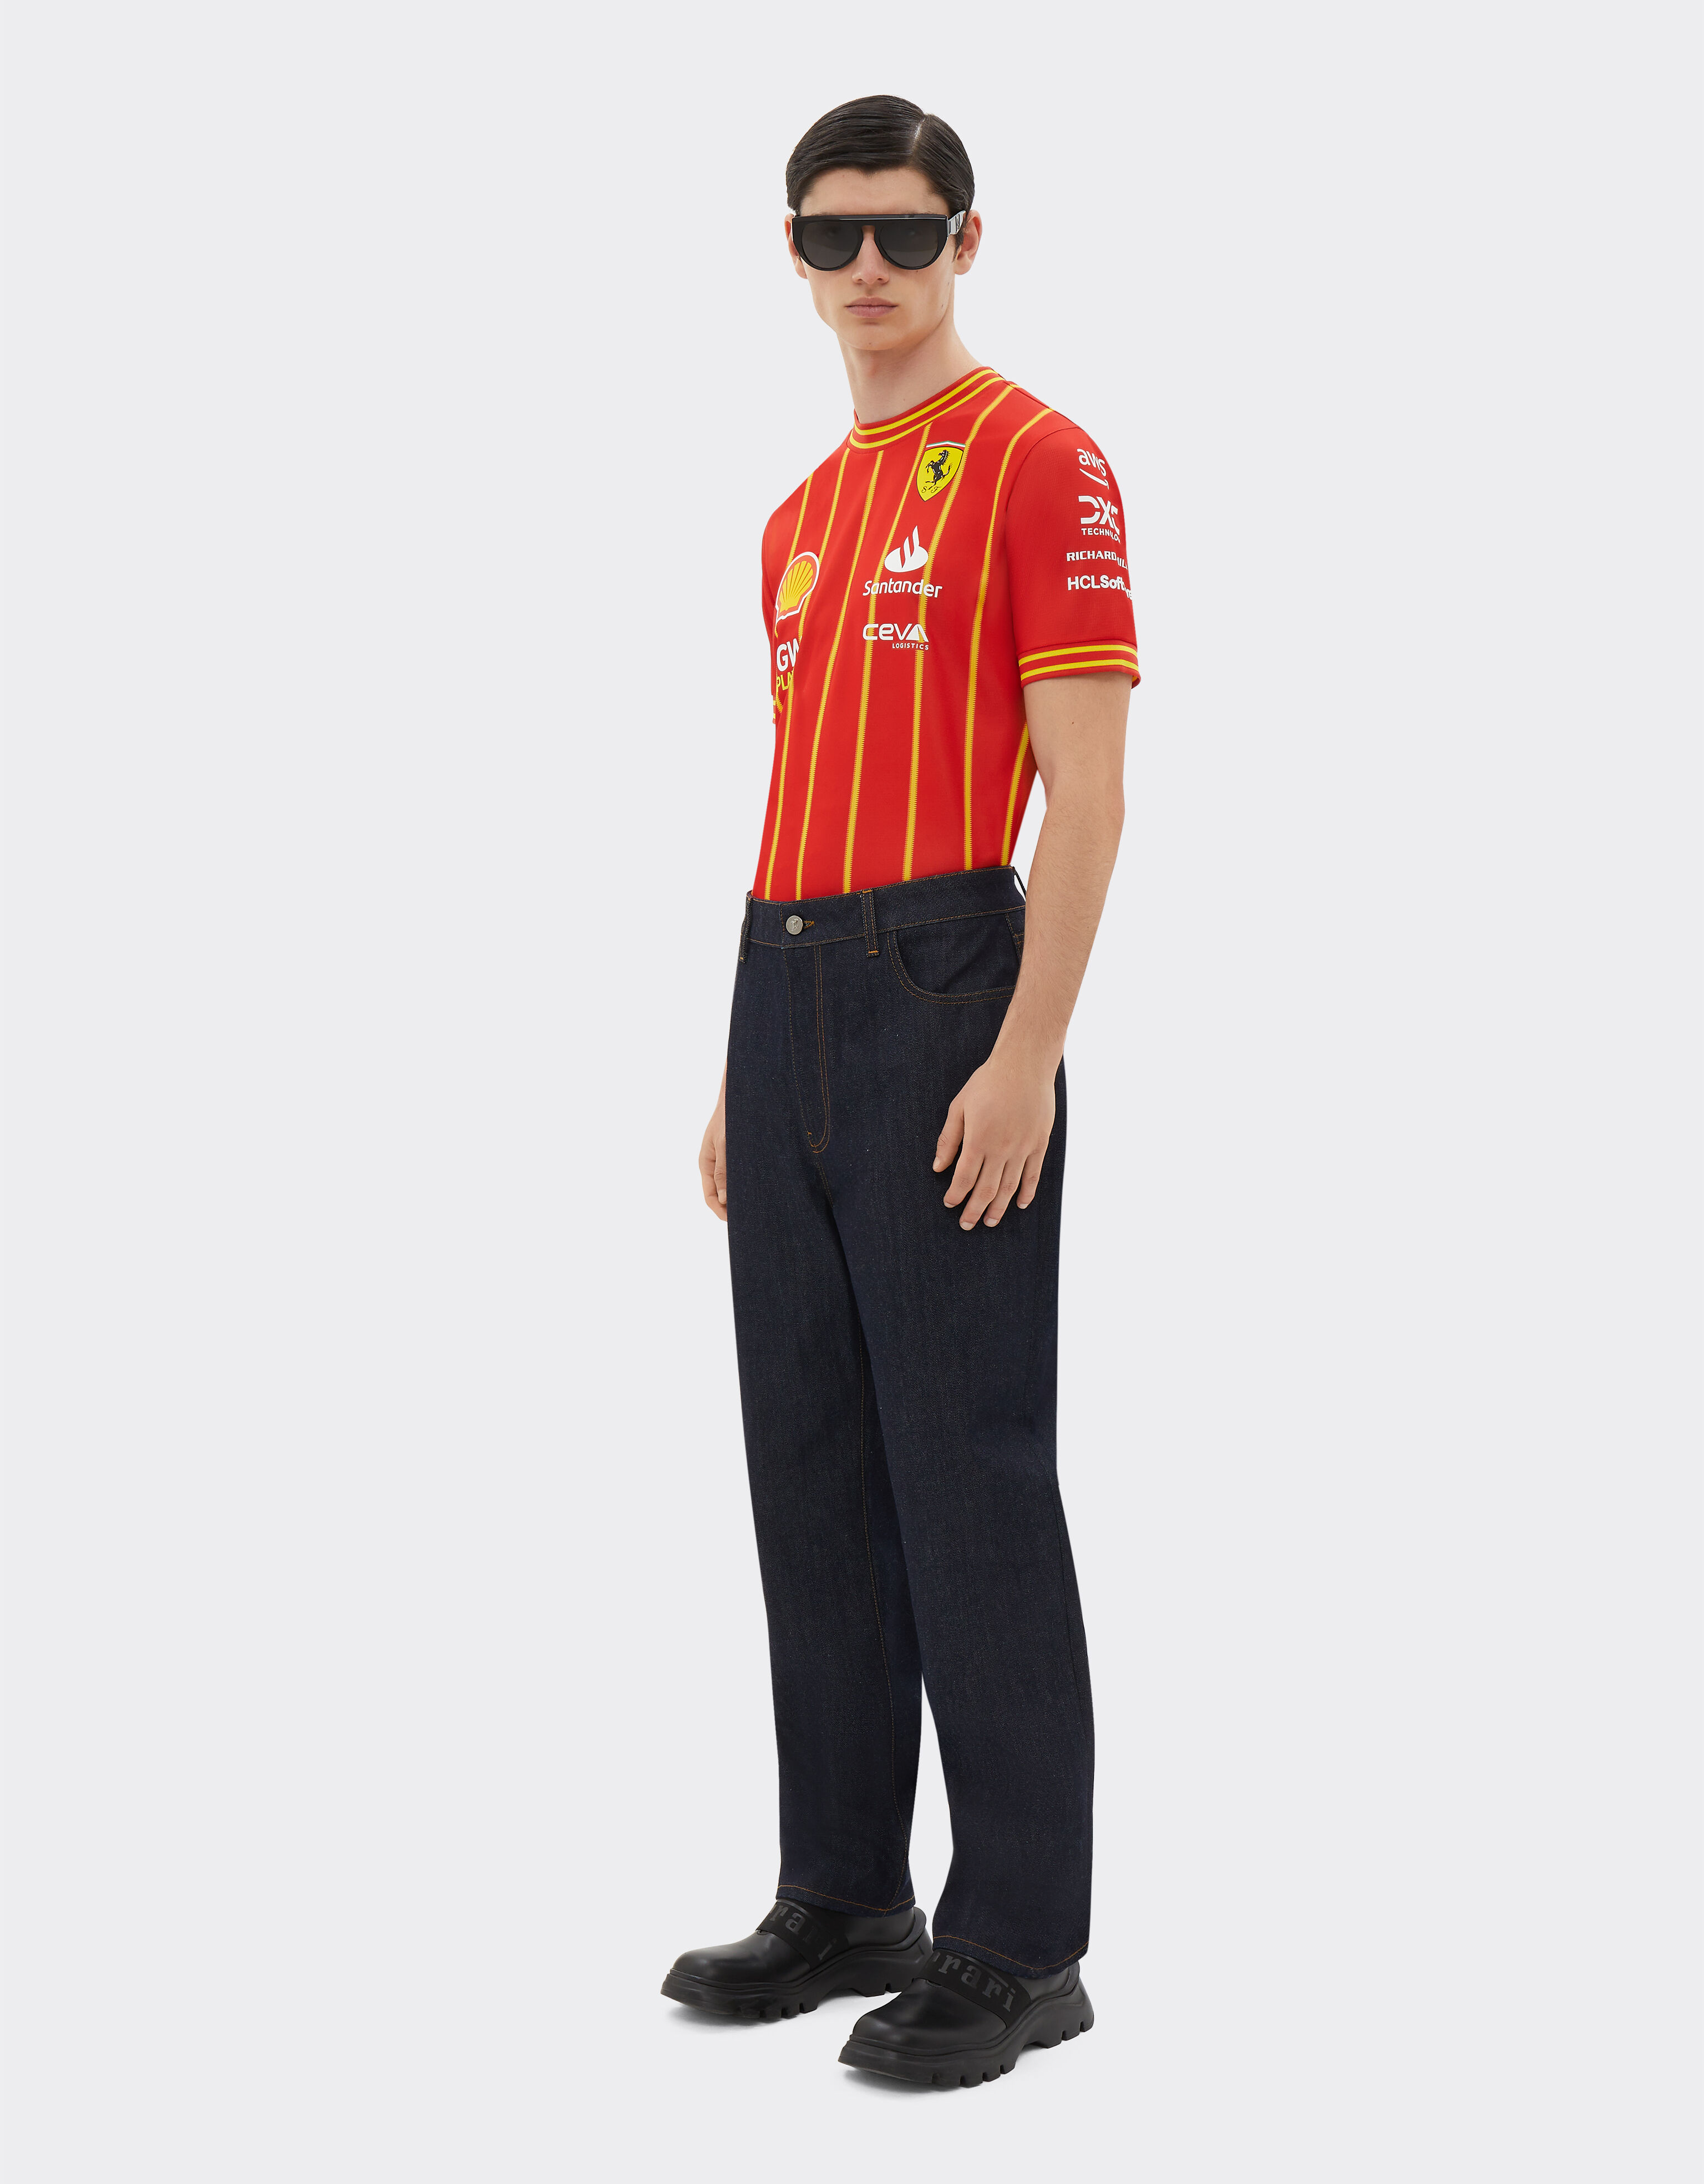 Ferrari 勒克莱尔代表法拉利车队的彪马球衣 - 奥地利特别版 Rosso Corsa 红色 F1338f